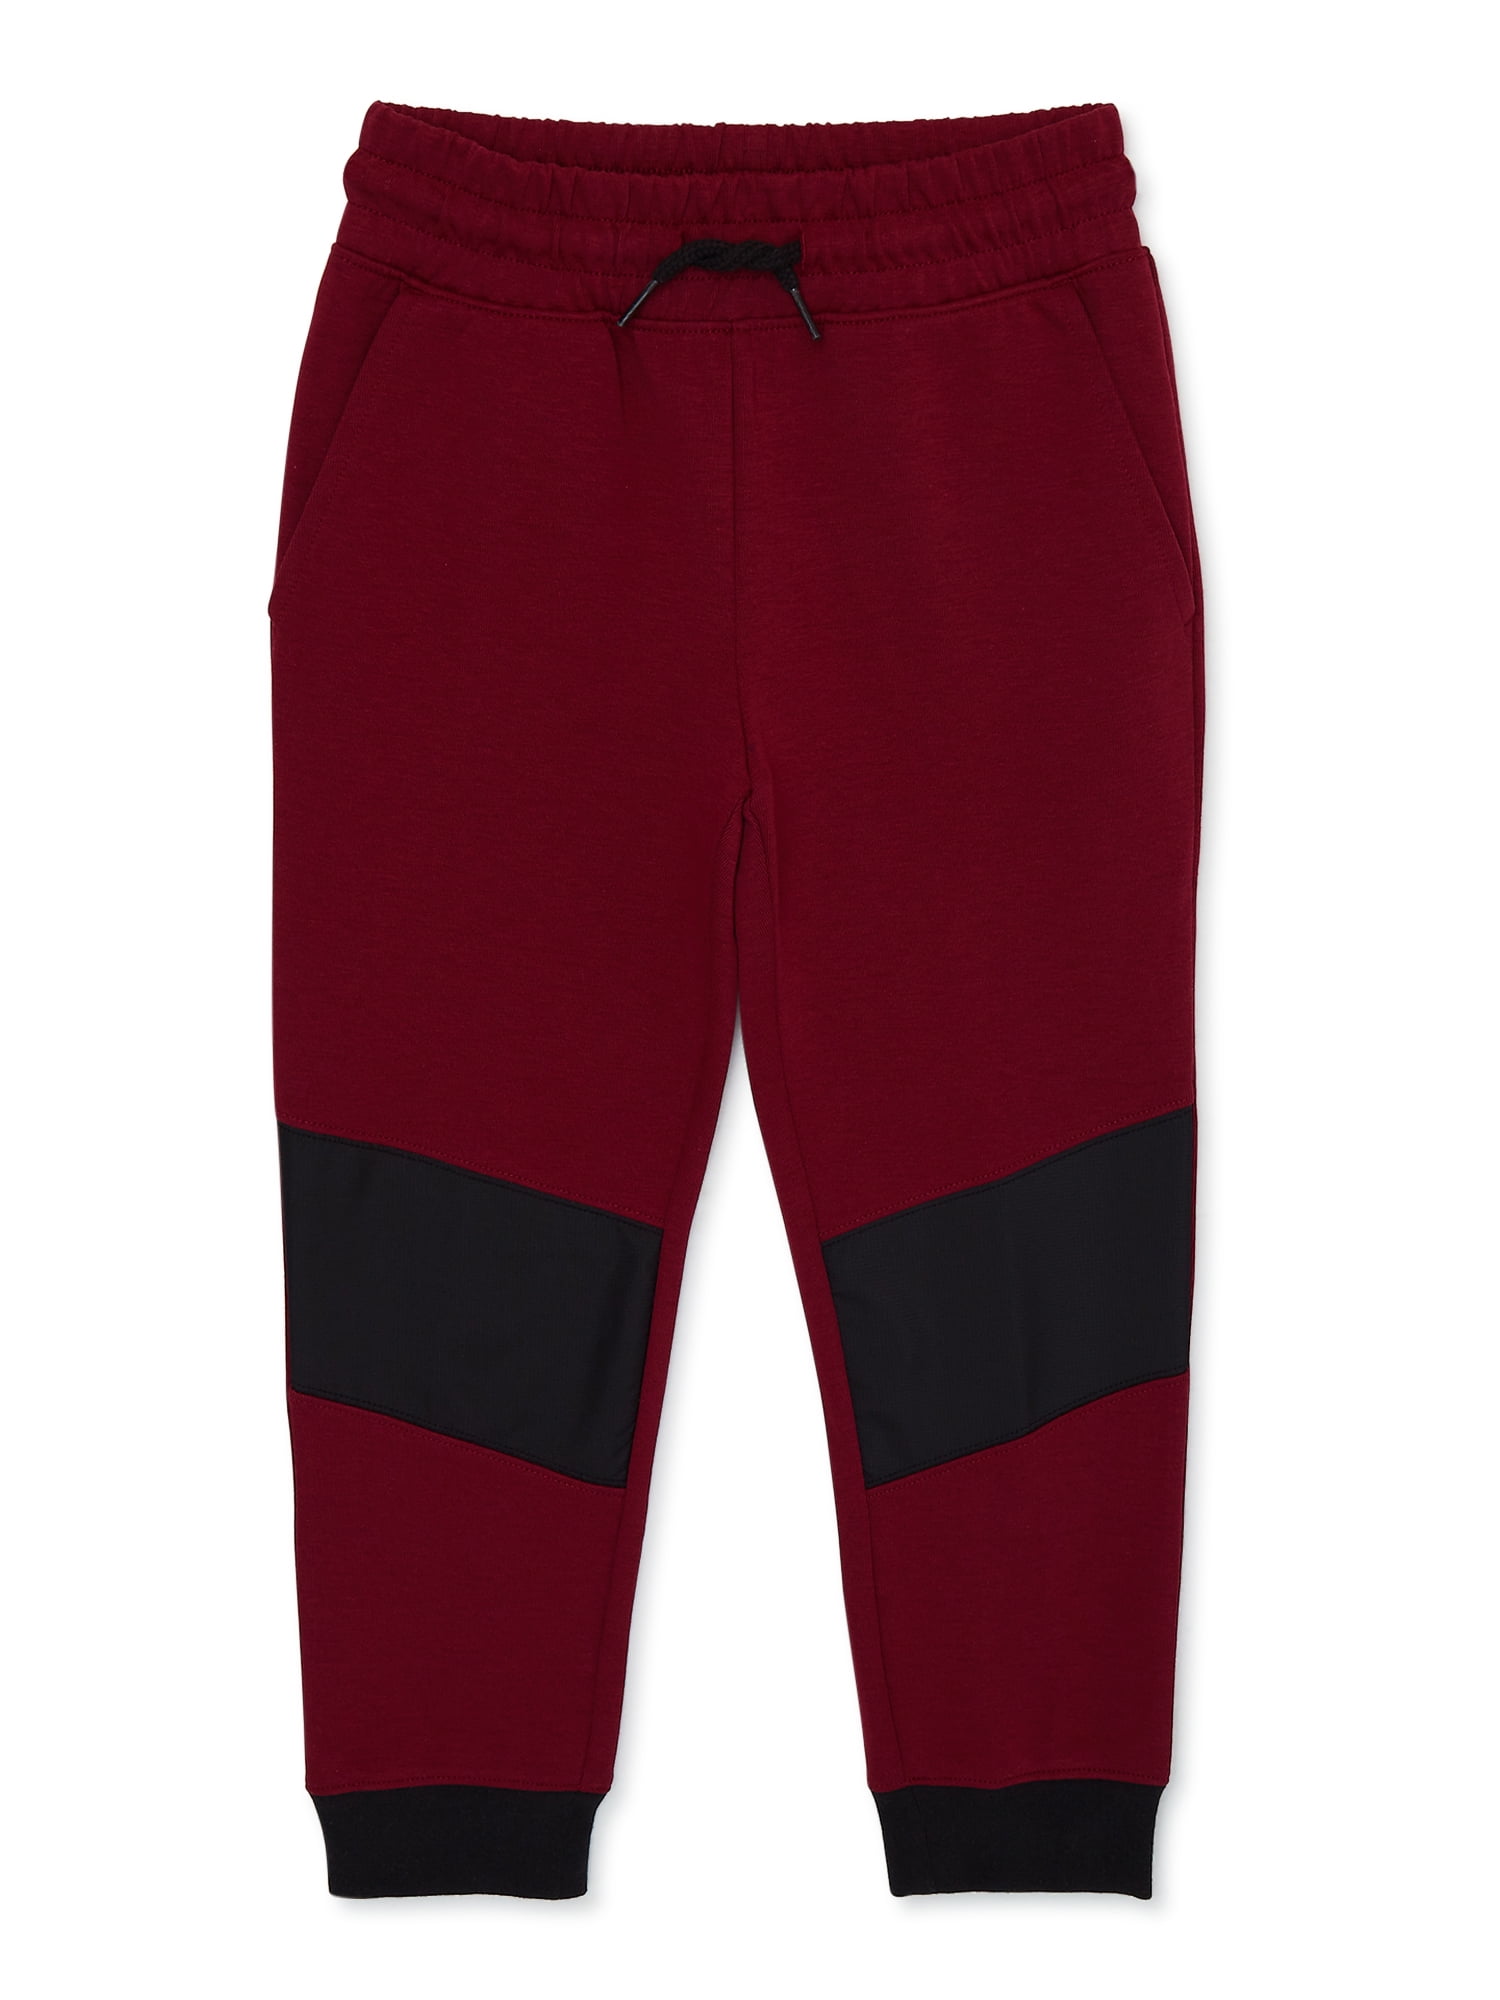 Athletic Works Boys Active Knit Pants, Sizes 4-18 & Husky - Walmart.com